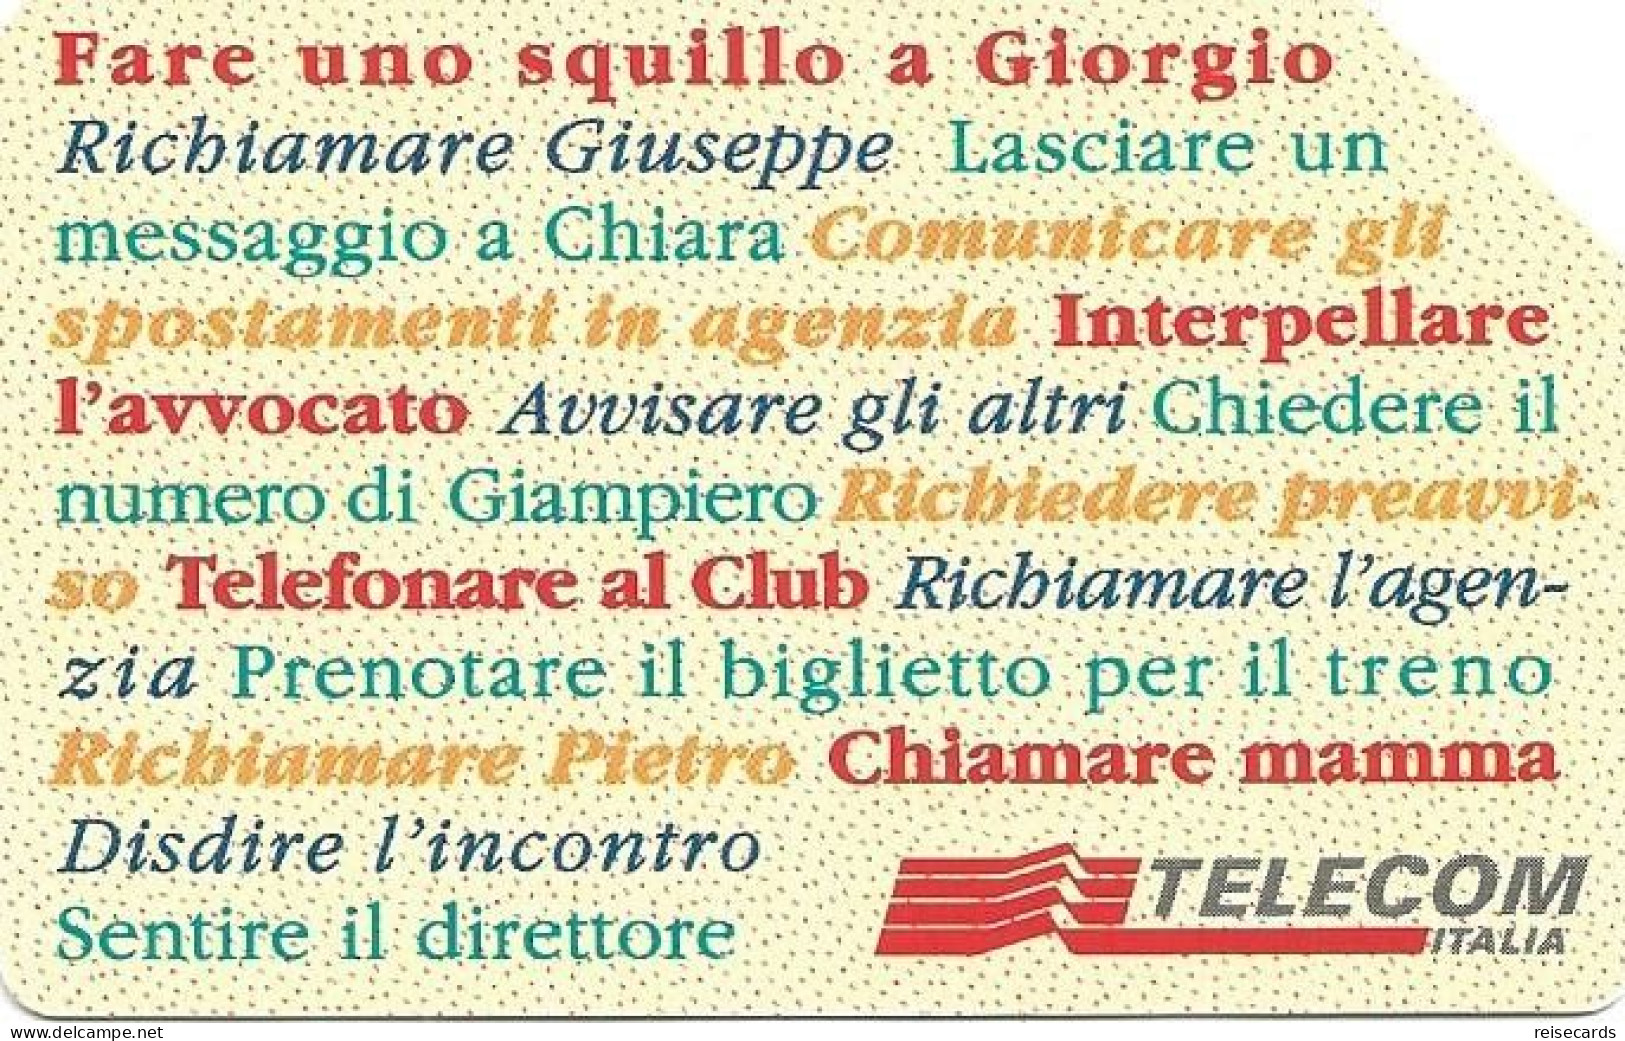 Italy: Telecom Italia - Storie Di Vita Quotidiana - Public Advertising